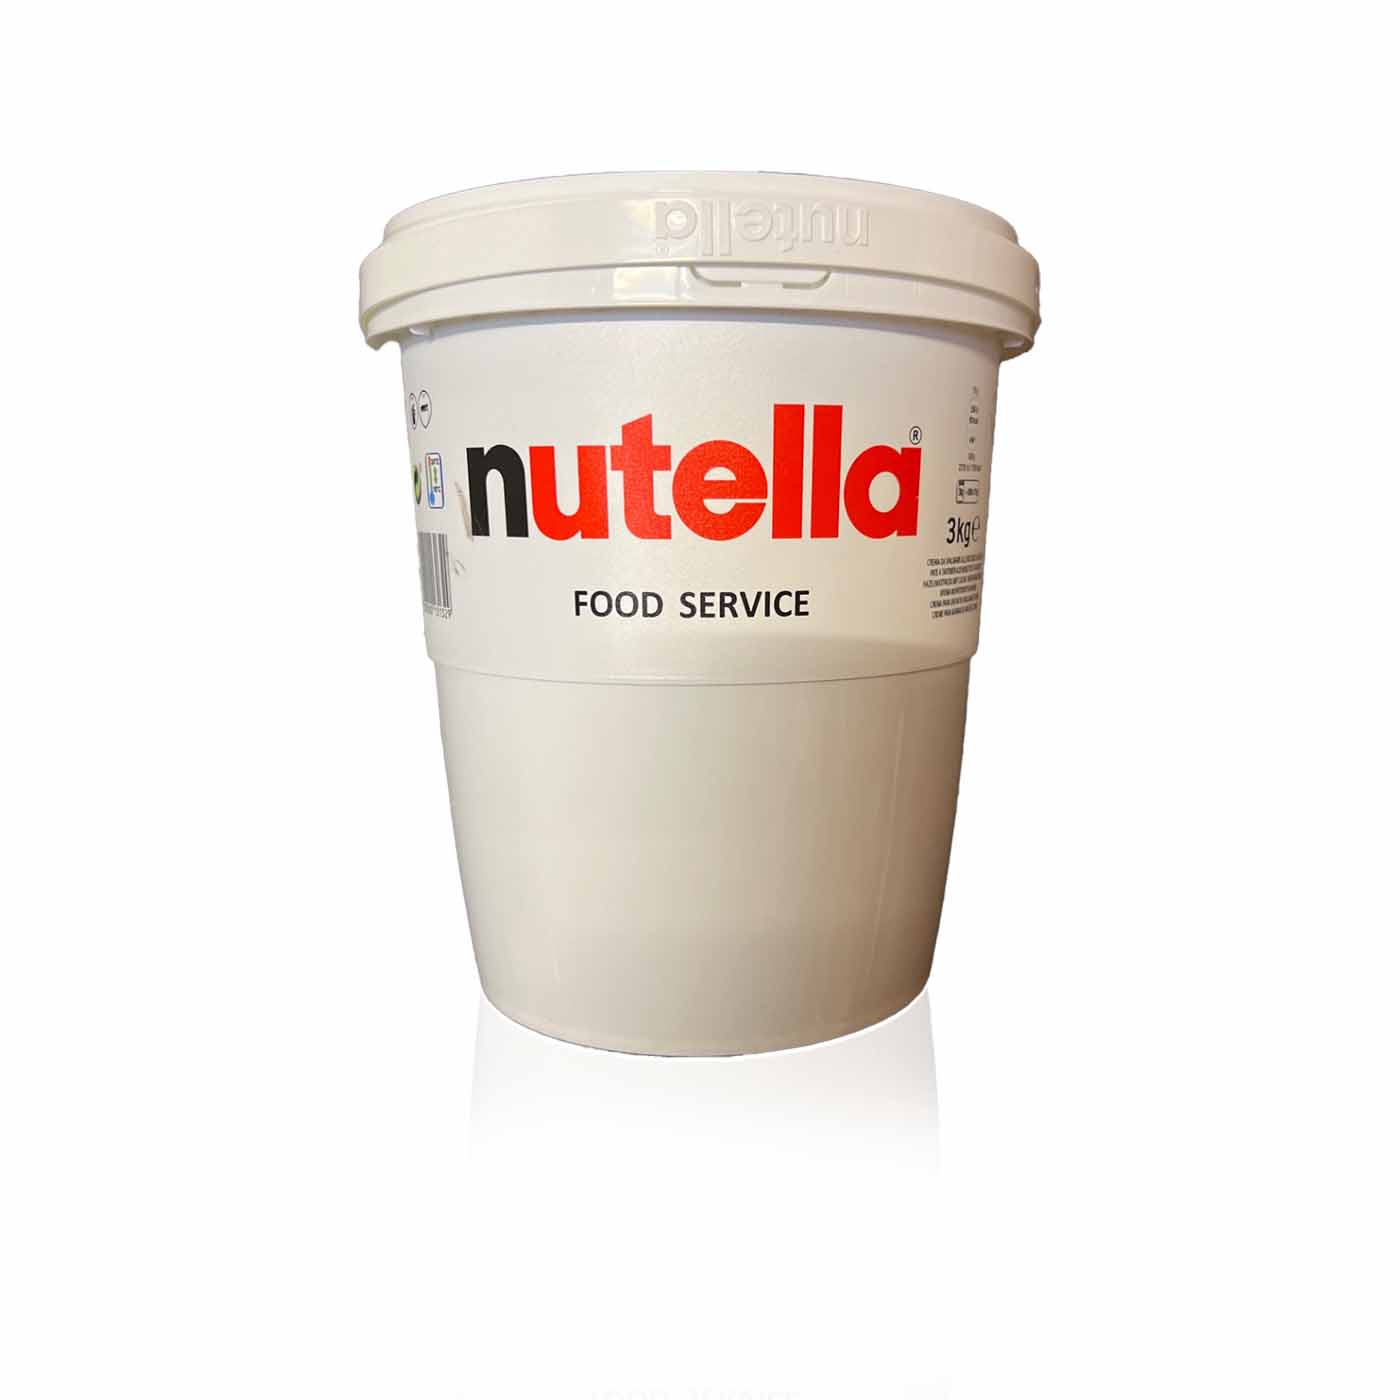 NUTELLA - Food Service - 3kg